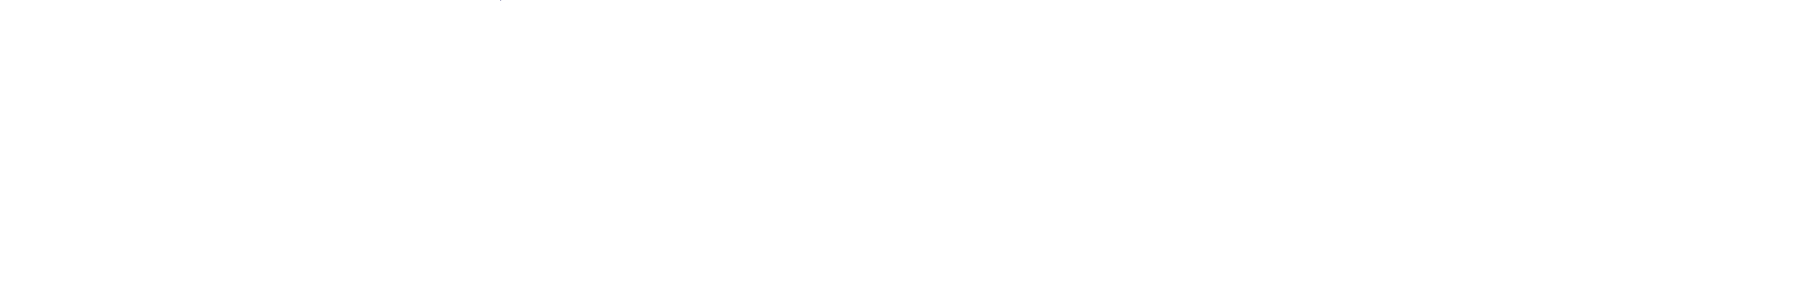 Hannon Hill footer logo